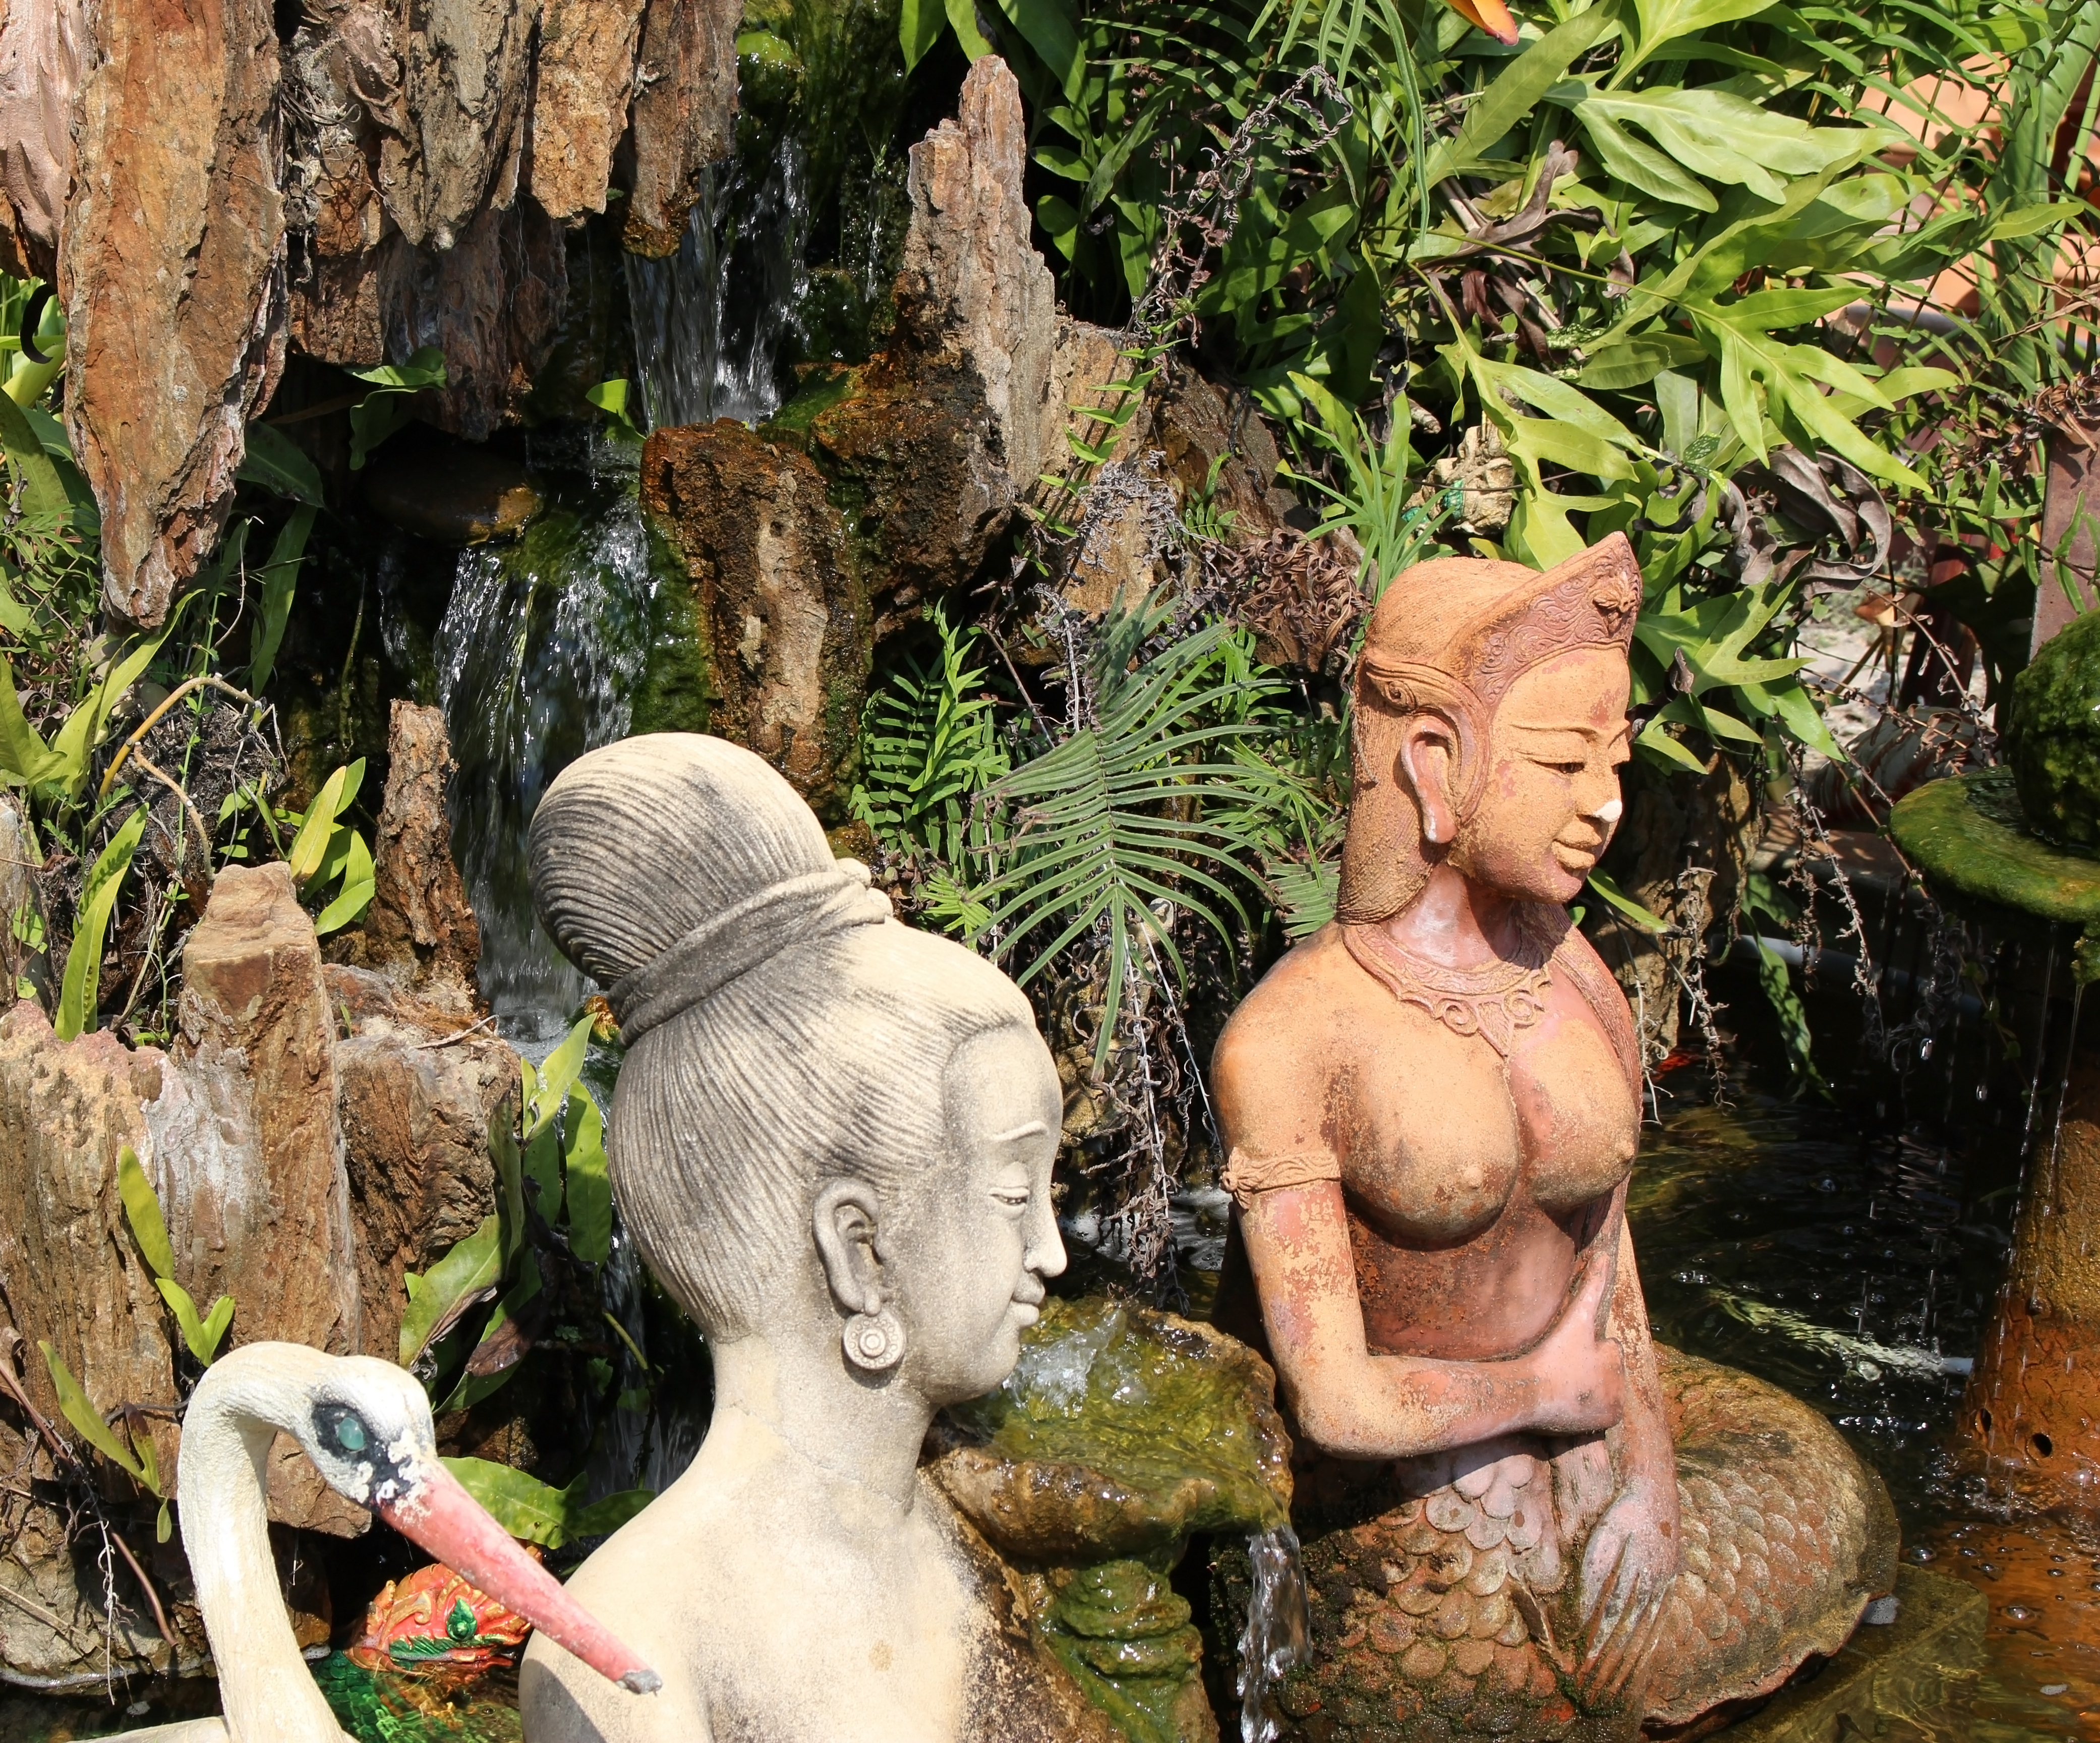 Oriental garden statue figurines in a water feature, asia photo